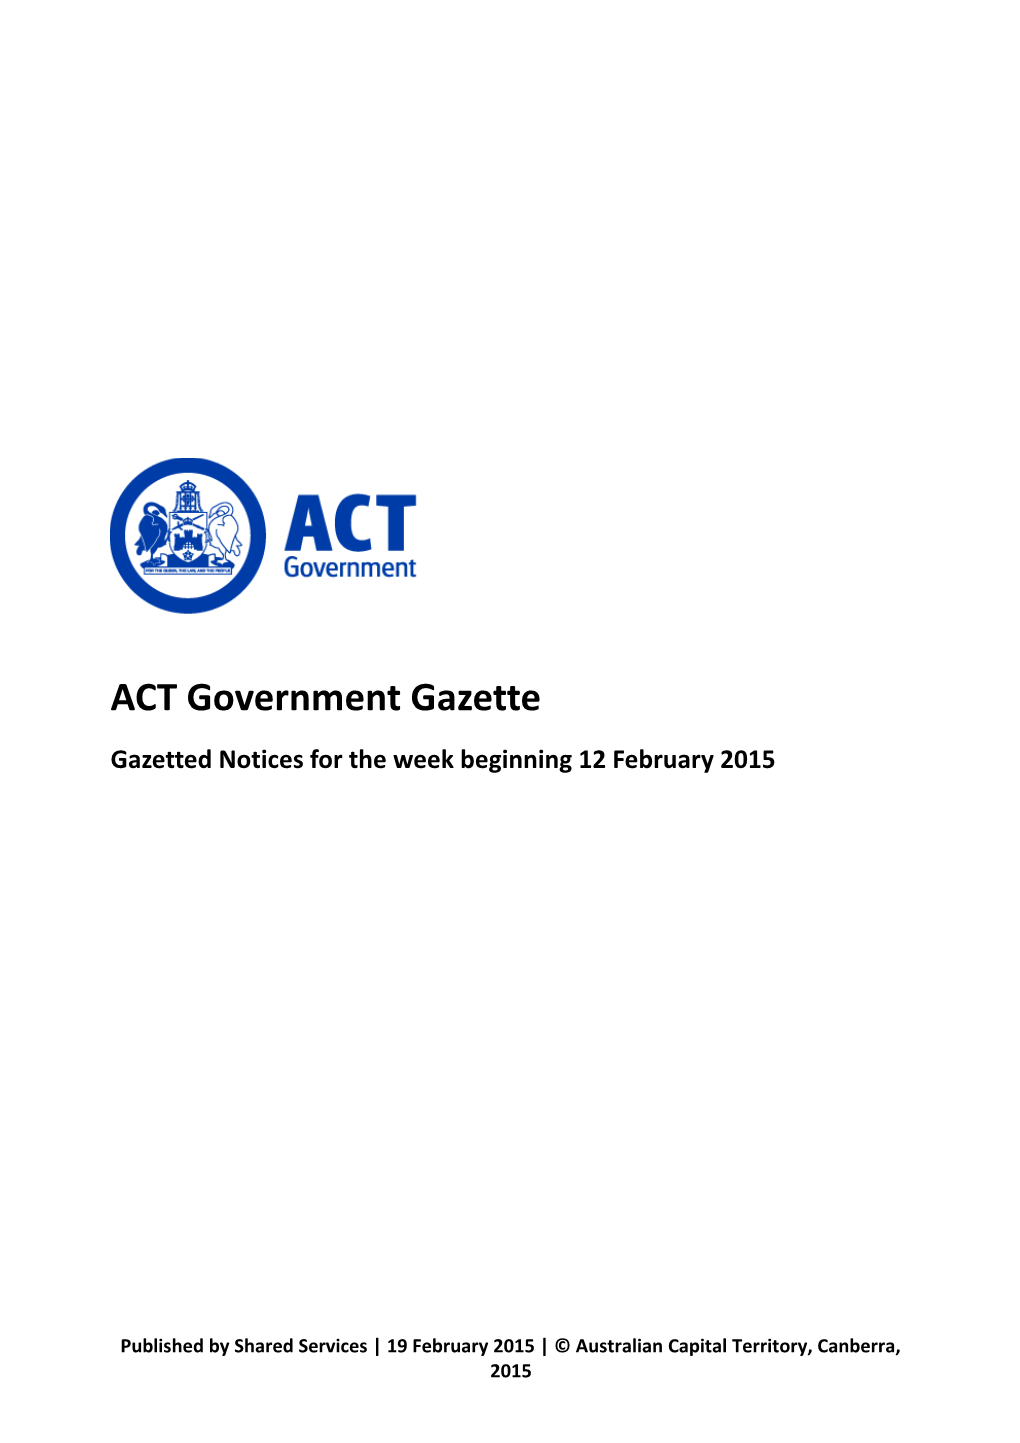 ACT Government Gazette 19 Feb 2015